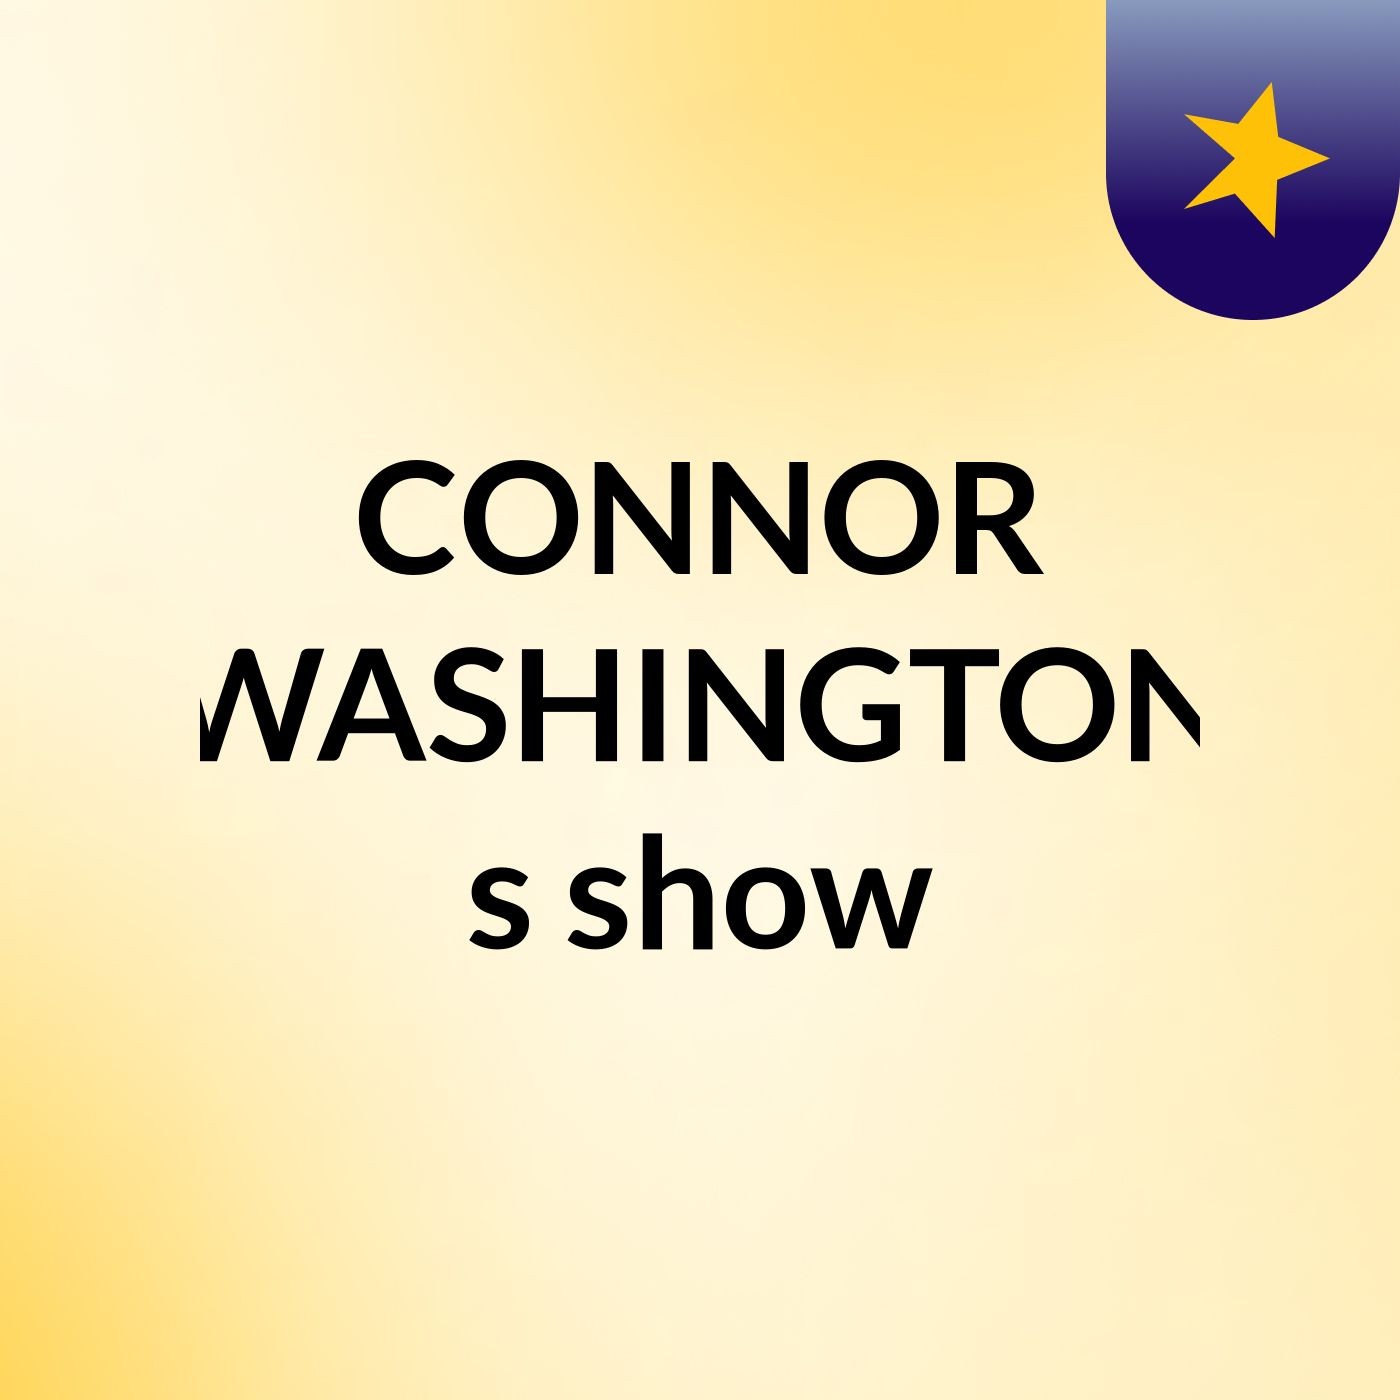 CONNOR WASHINGTON's show